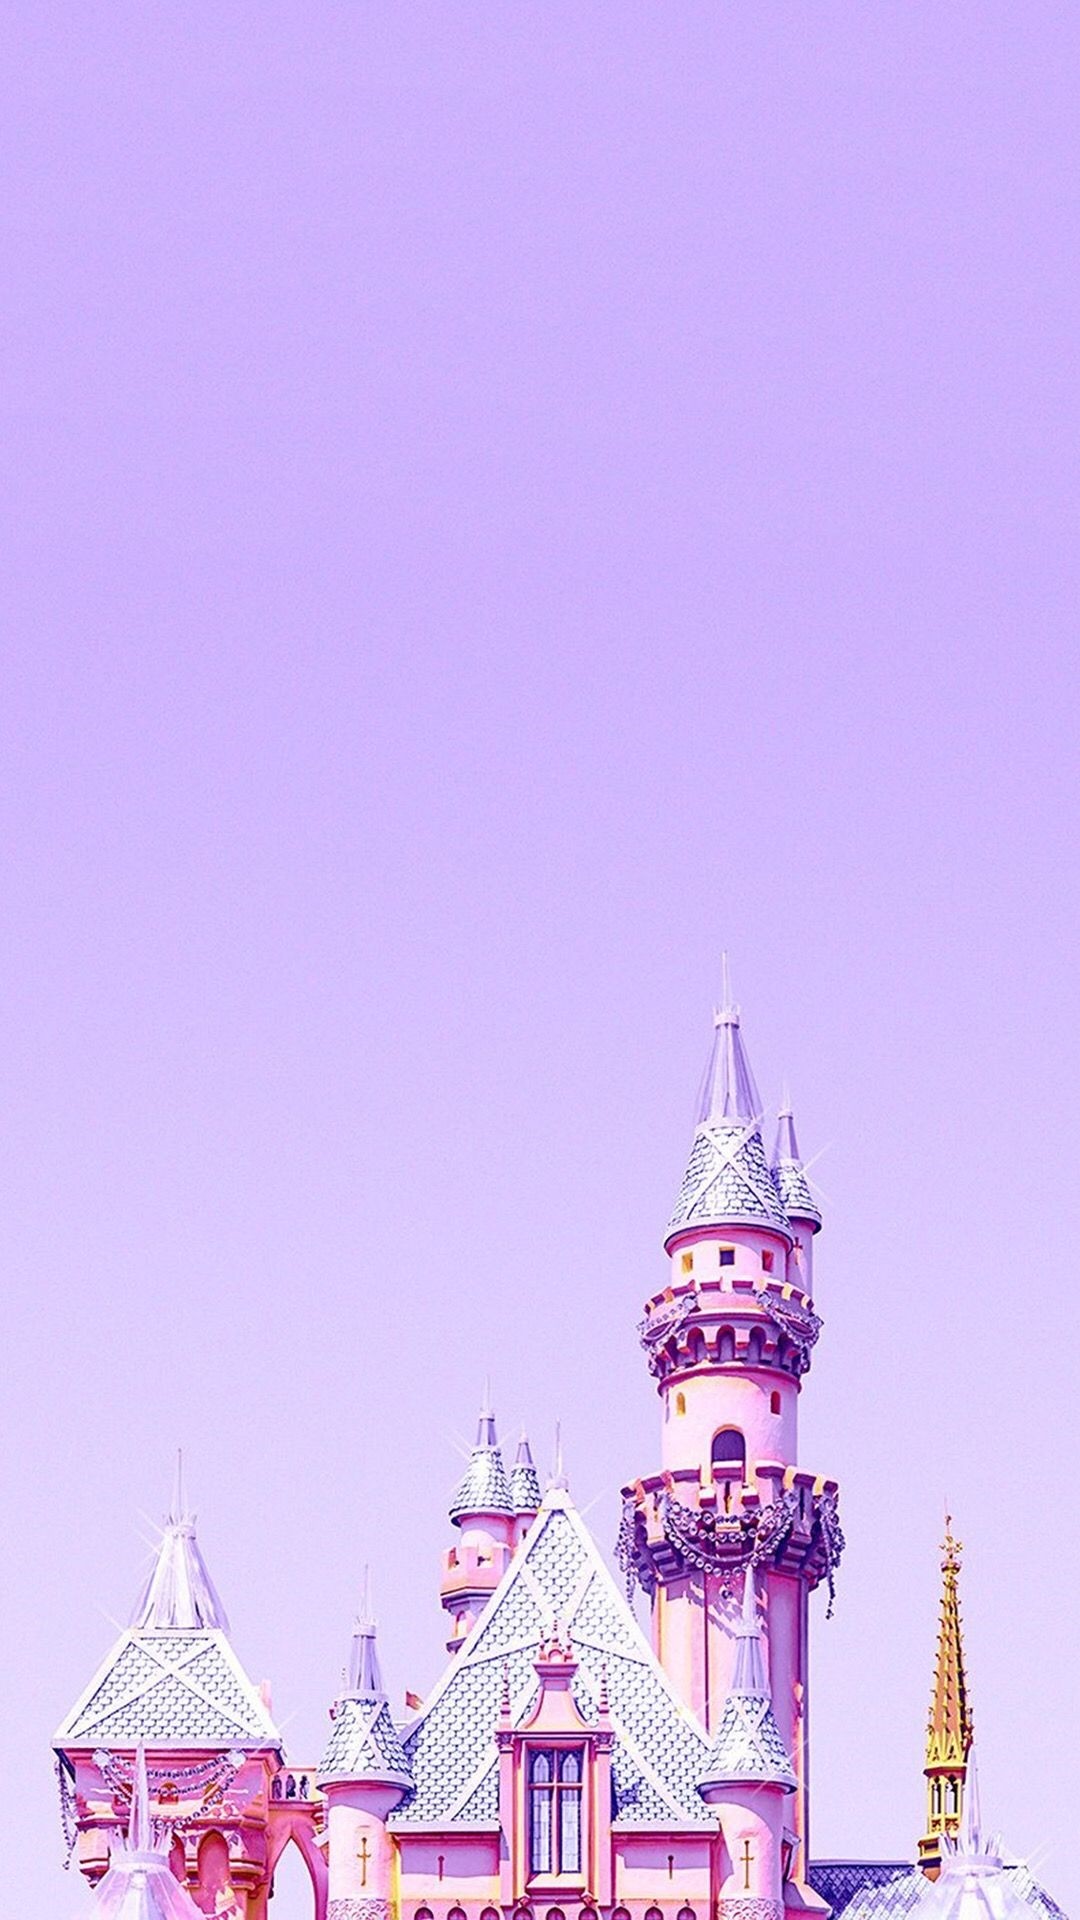 Disney iPhone 7 wallpaper